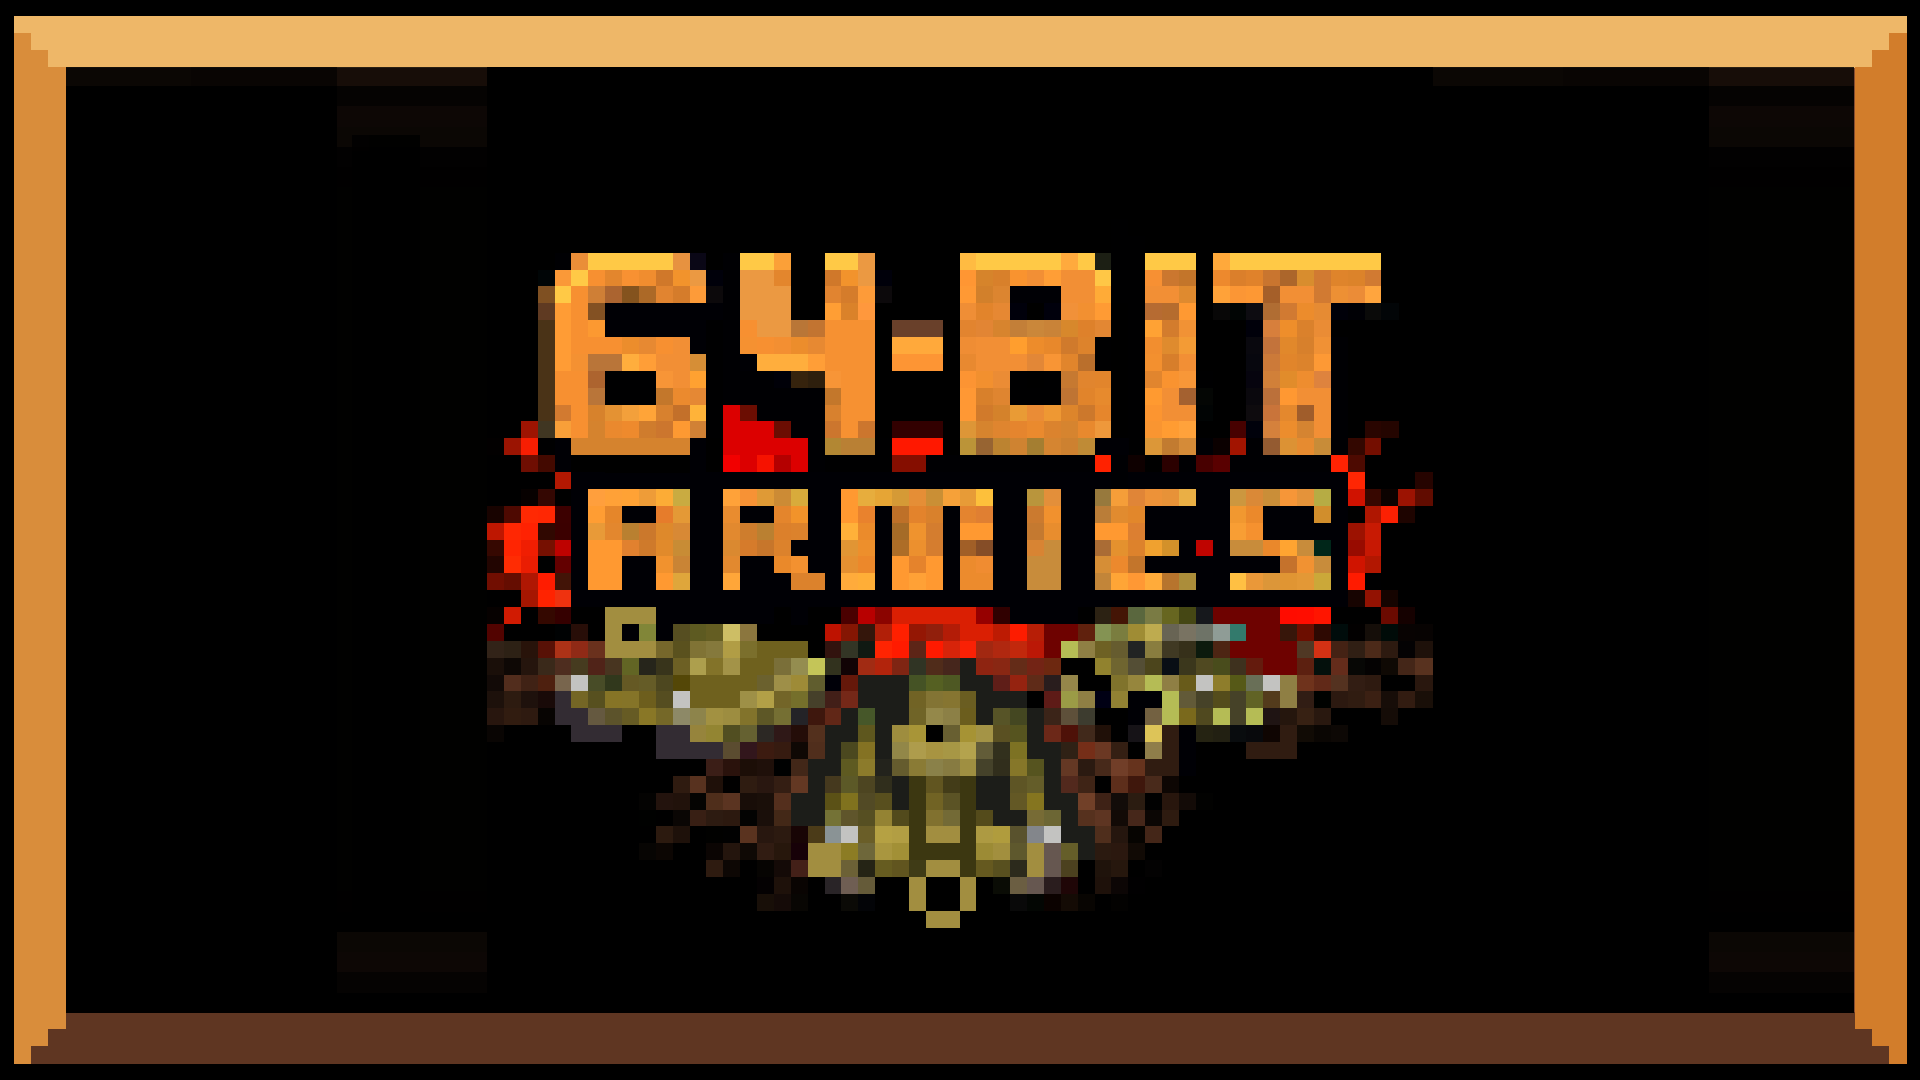 Icon for 64 Bit Armies